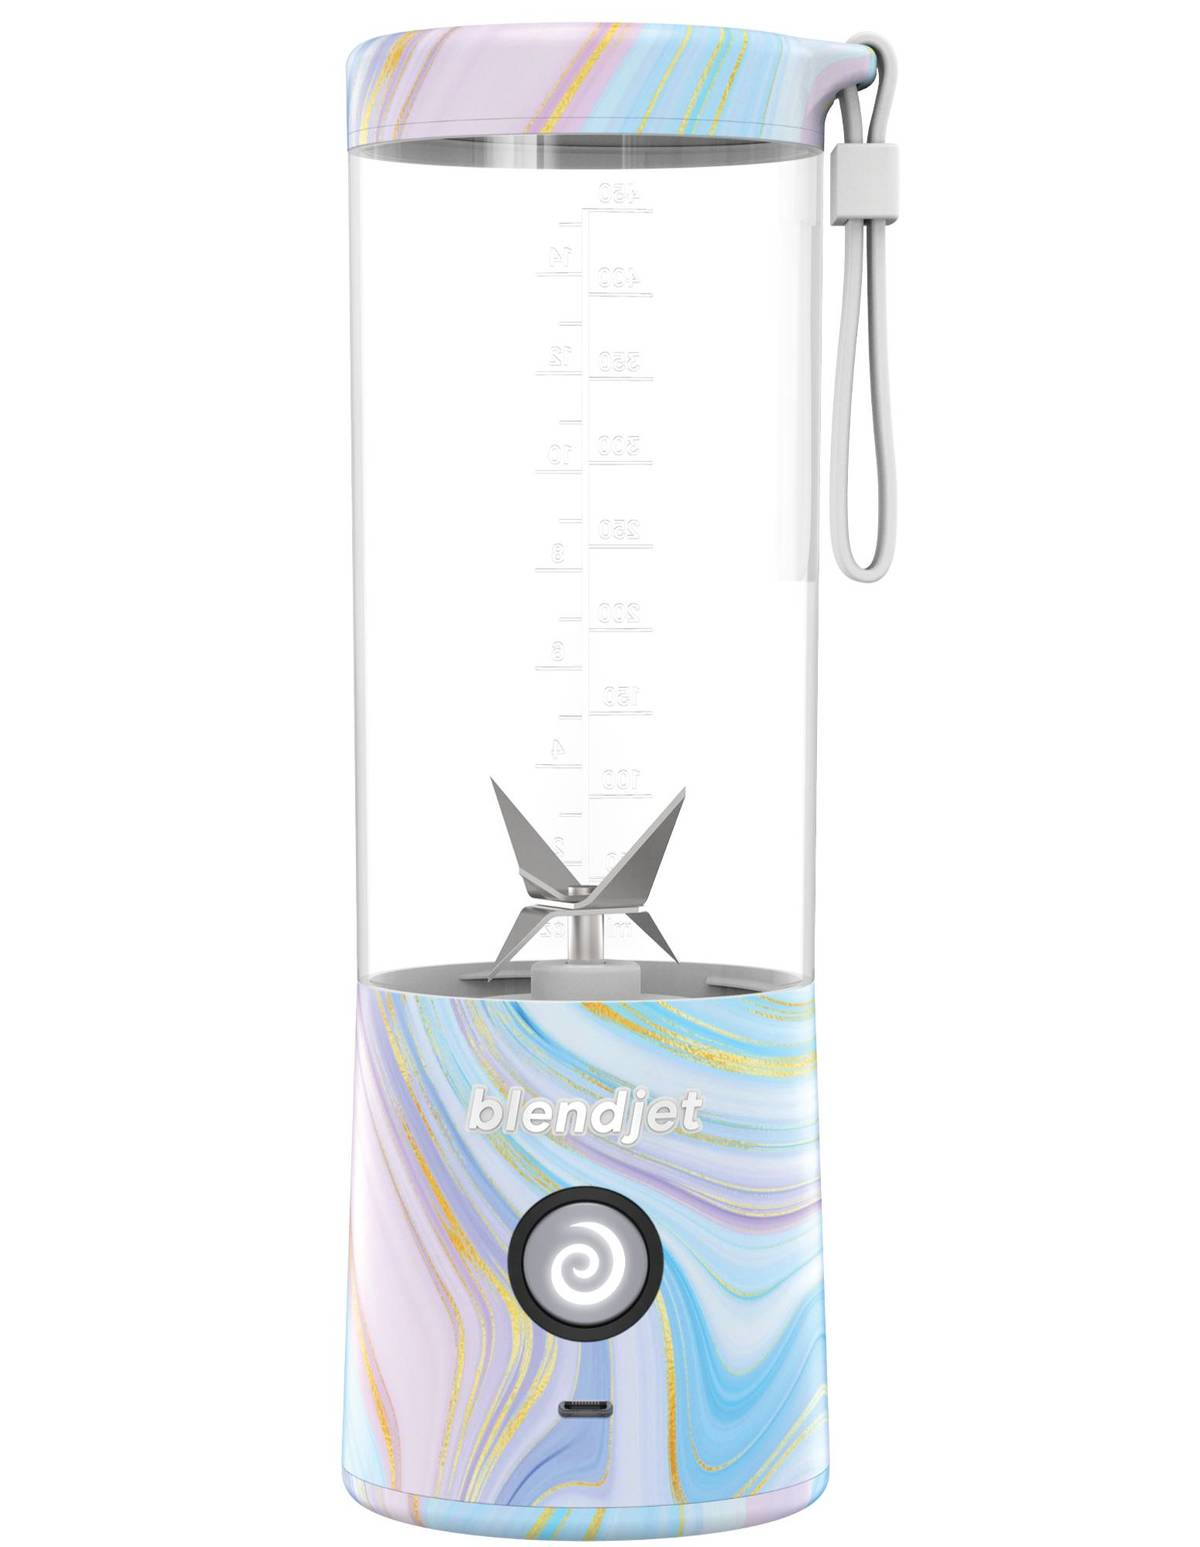 BLENDJET 2 Portable Blender Geode Mixer (5 Geode Volt) 